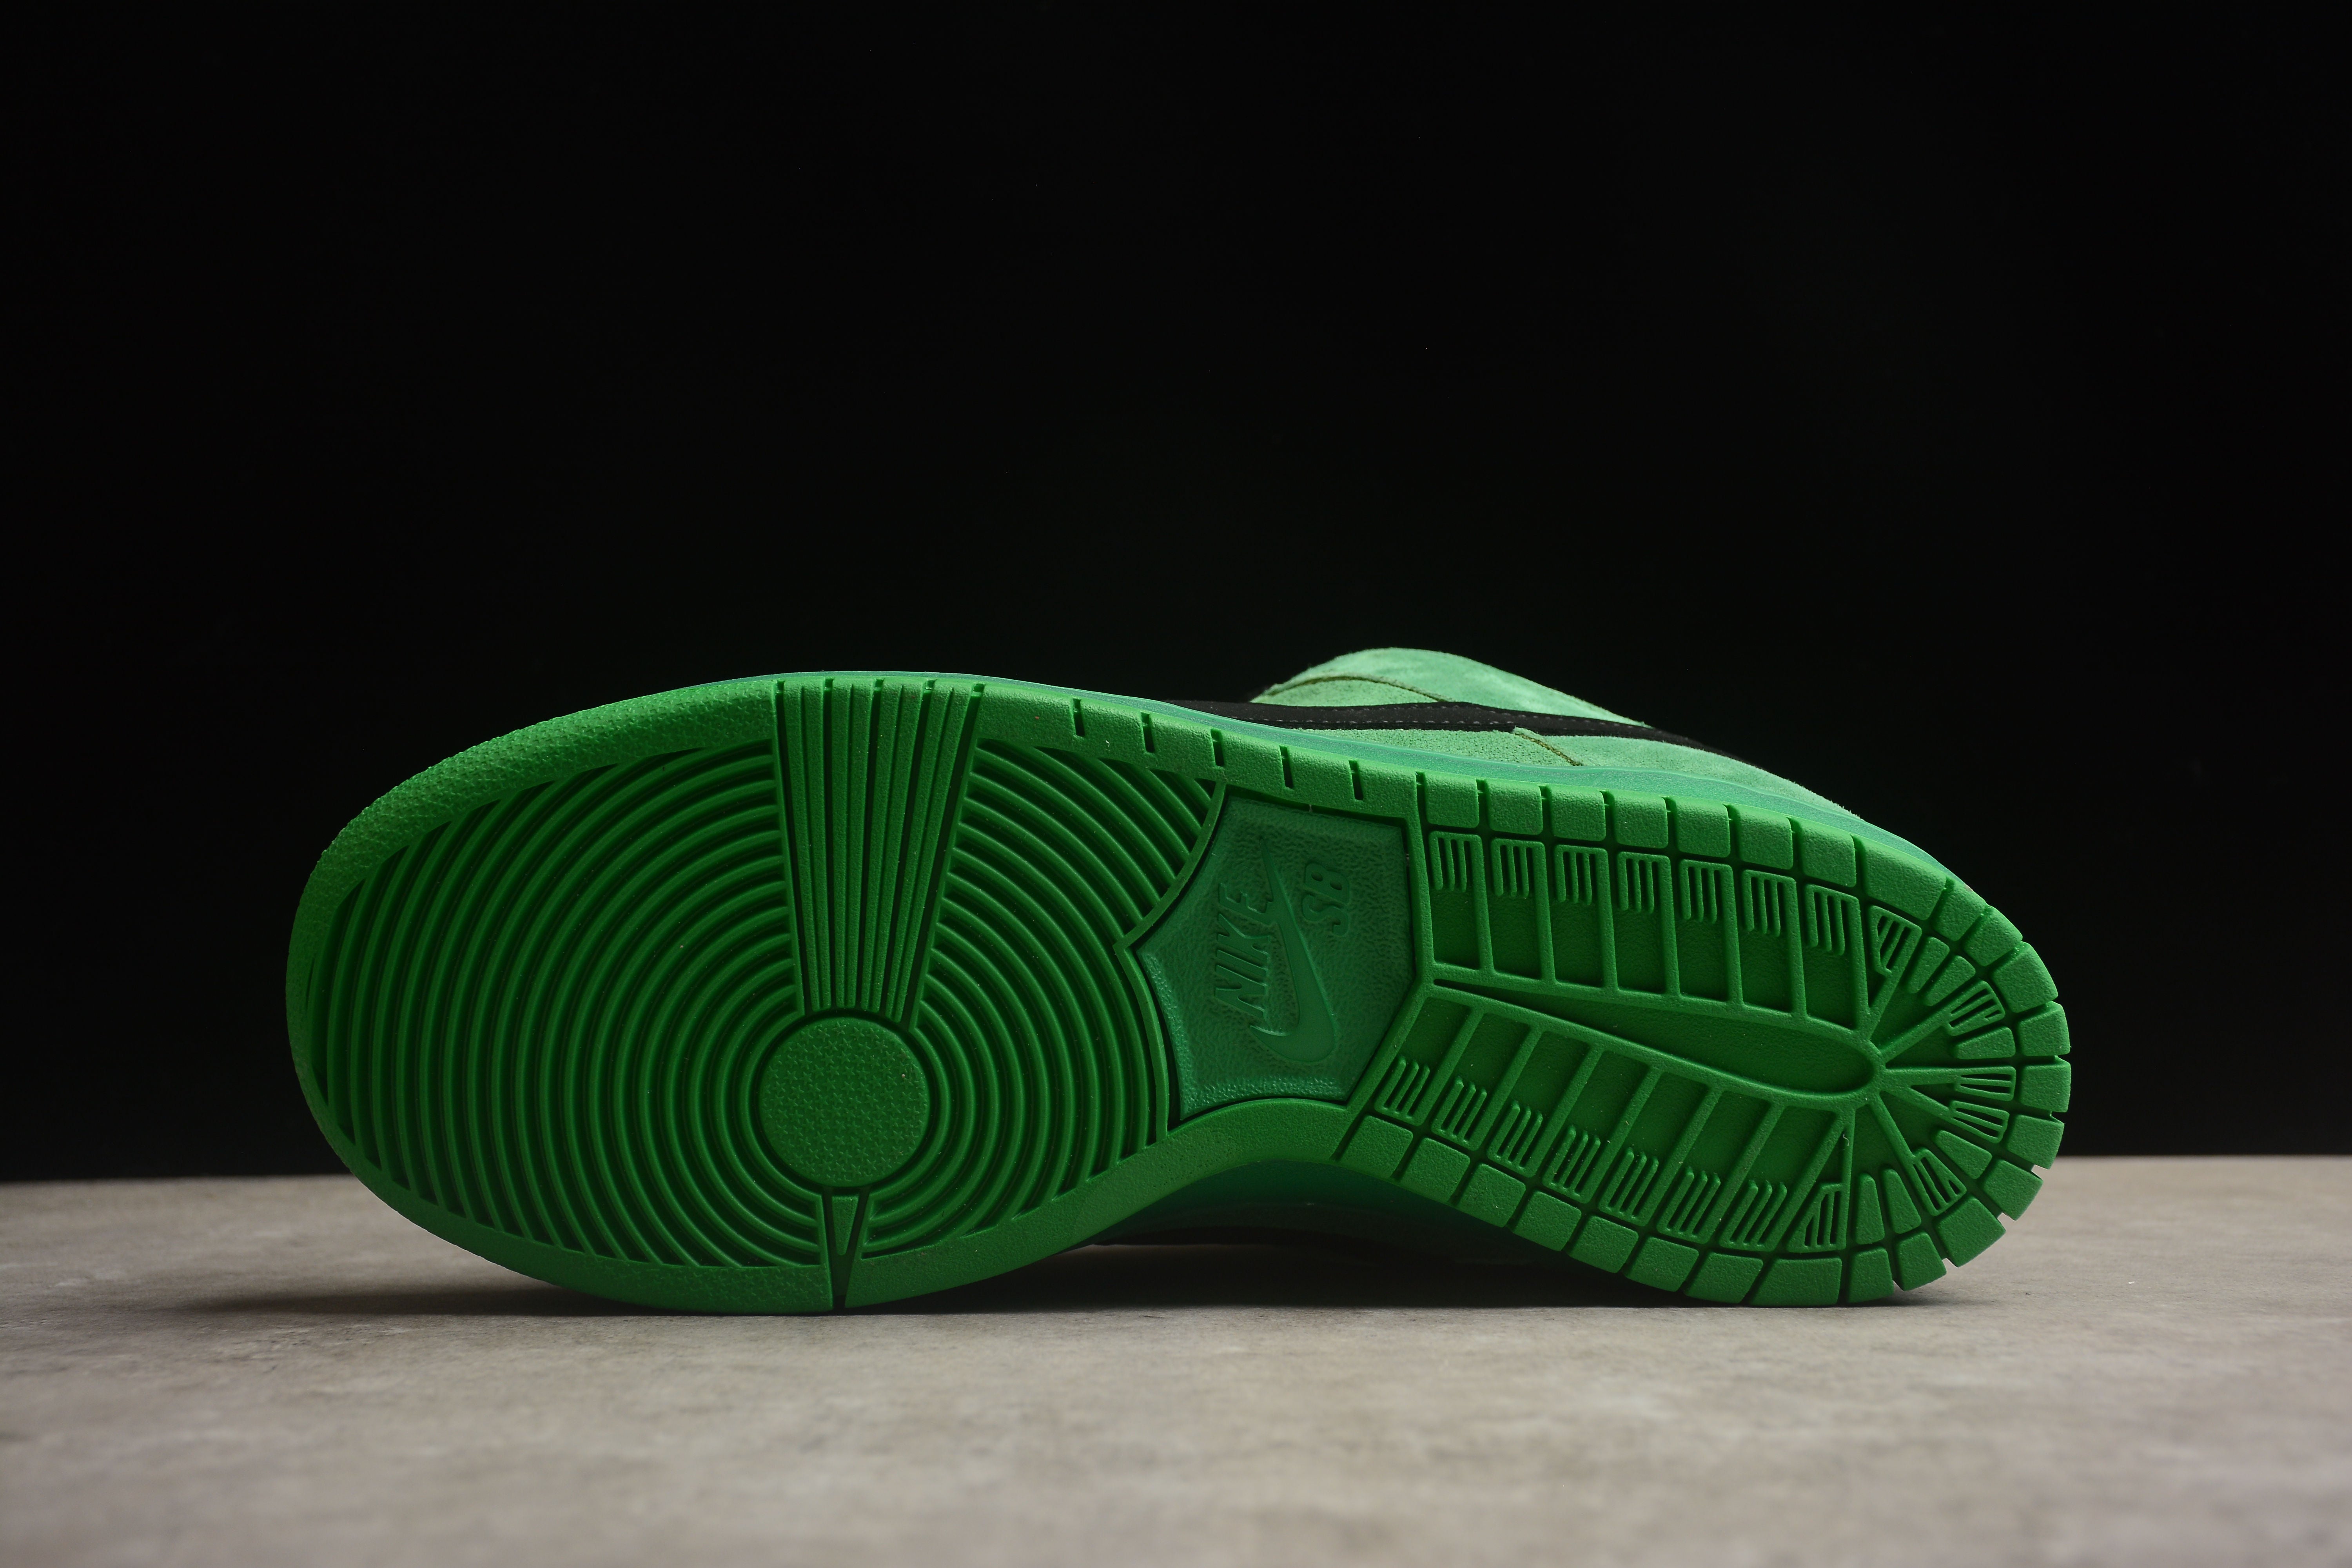 Nike SB dunk low cartoon power little police green shoes